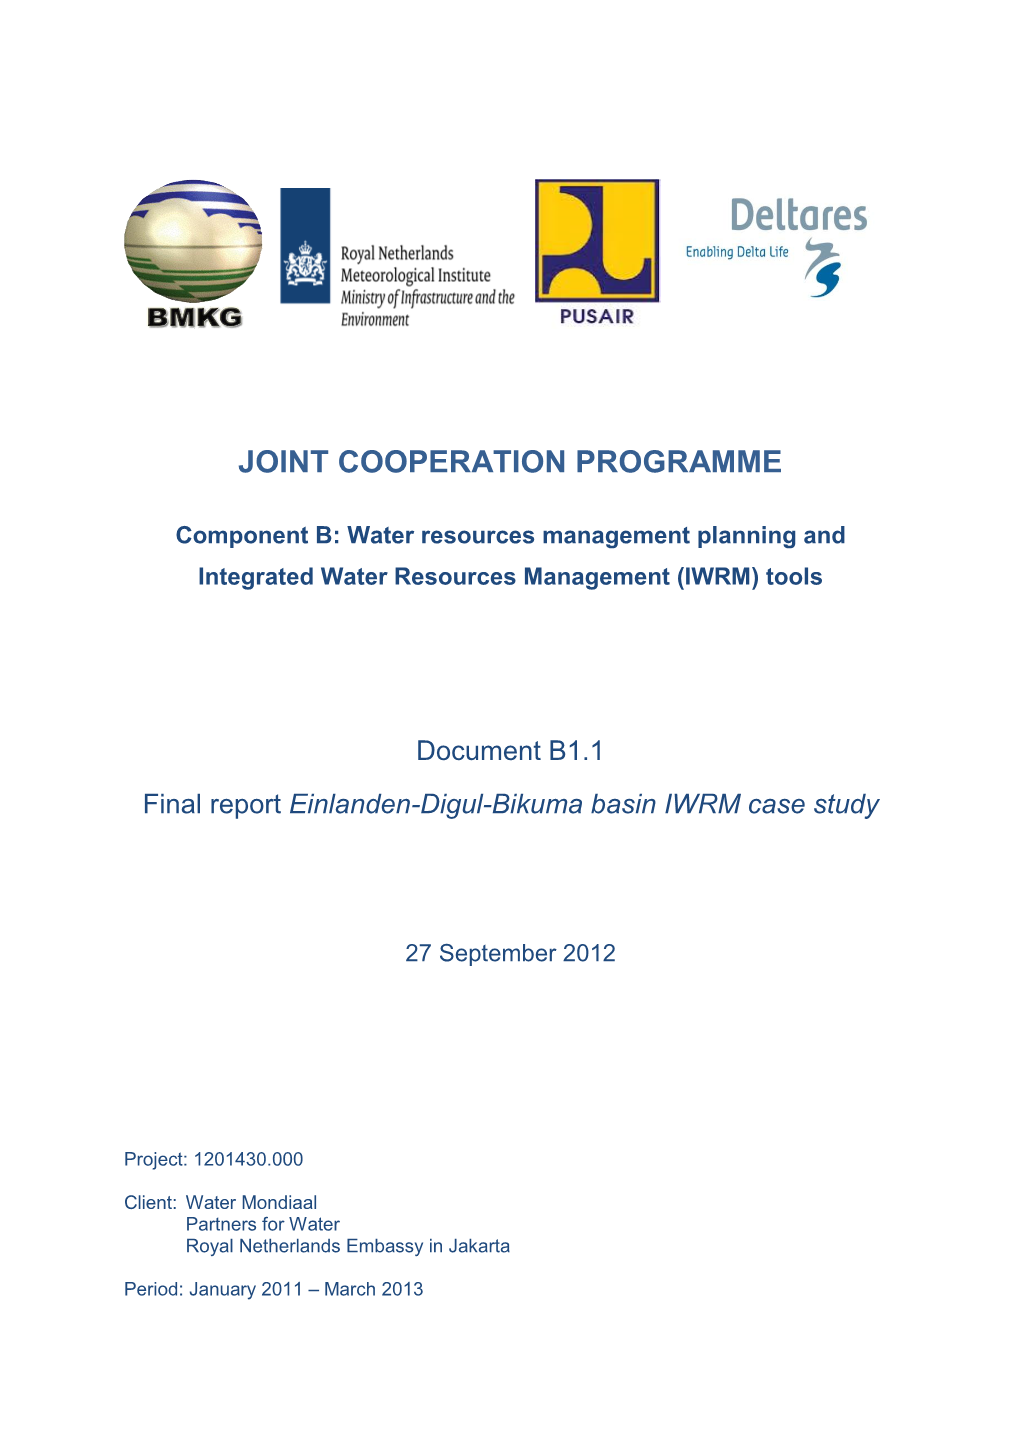 Einlanden-Digul-Bikuma Basin IWRM Case Study, September 27, 2012